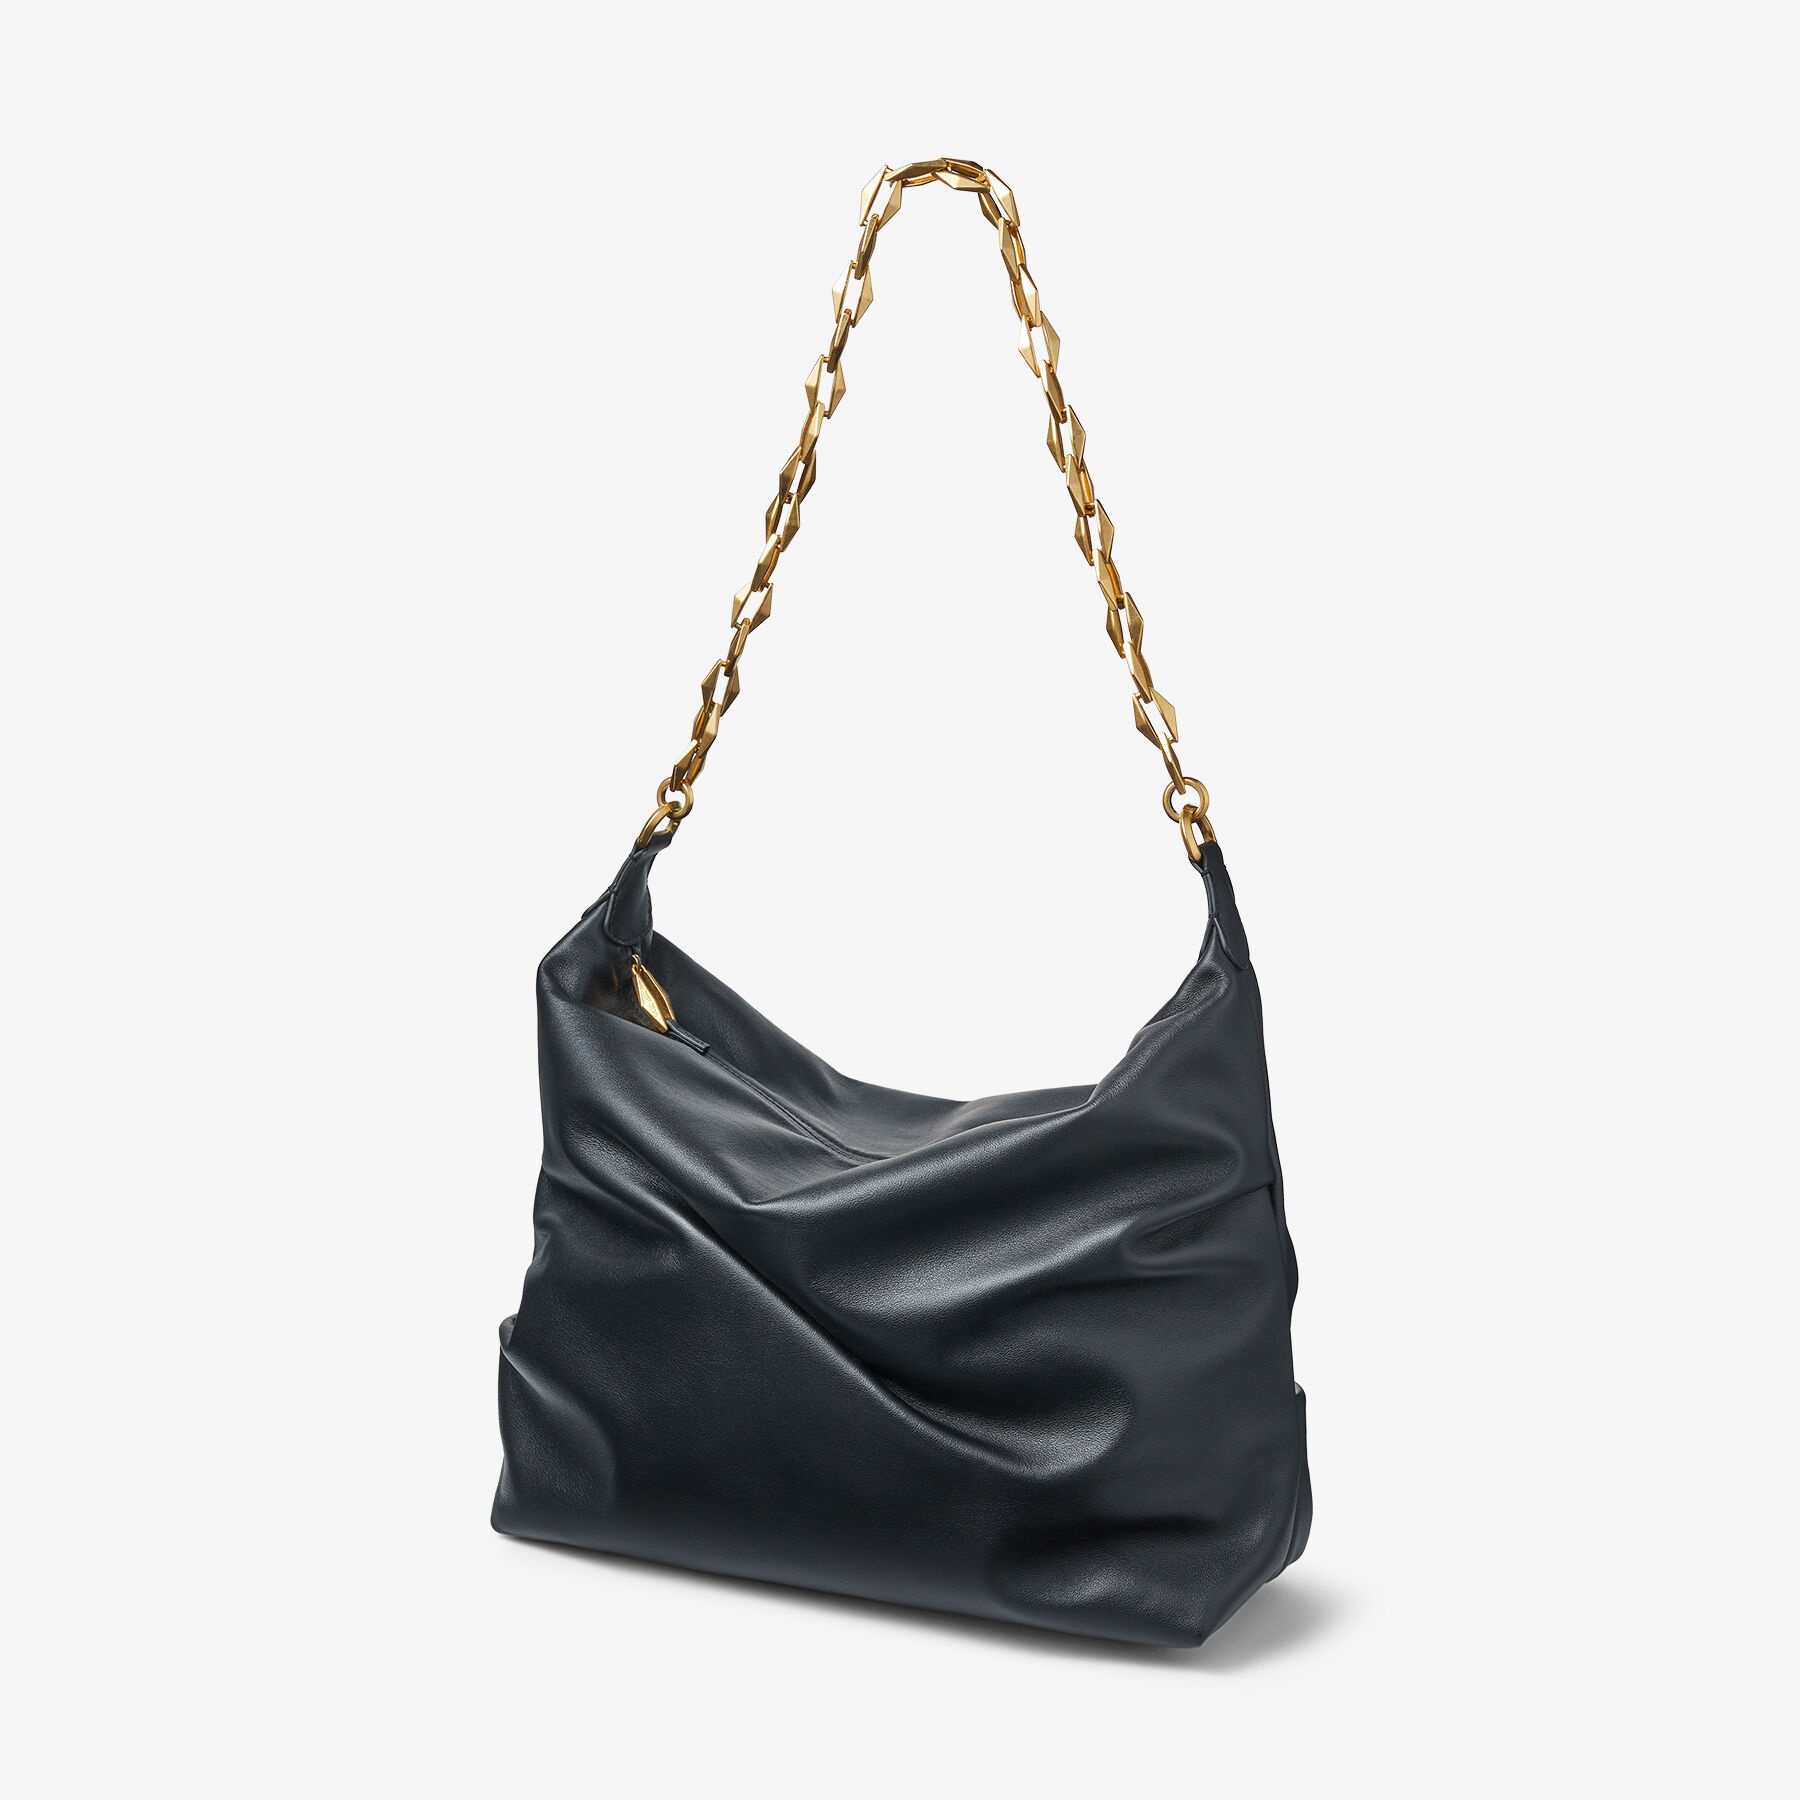 Diamond Soft Hobo M
Black Soft Calf Leather Hobo Bag with Chain Strap - 4